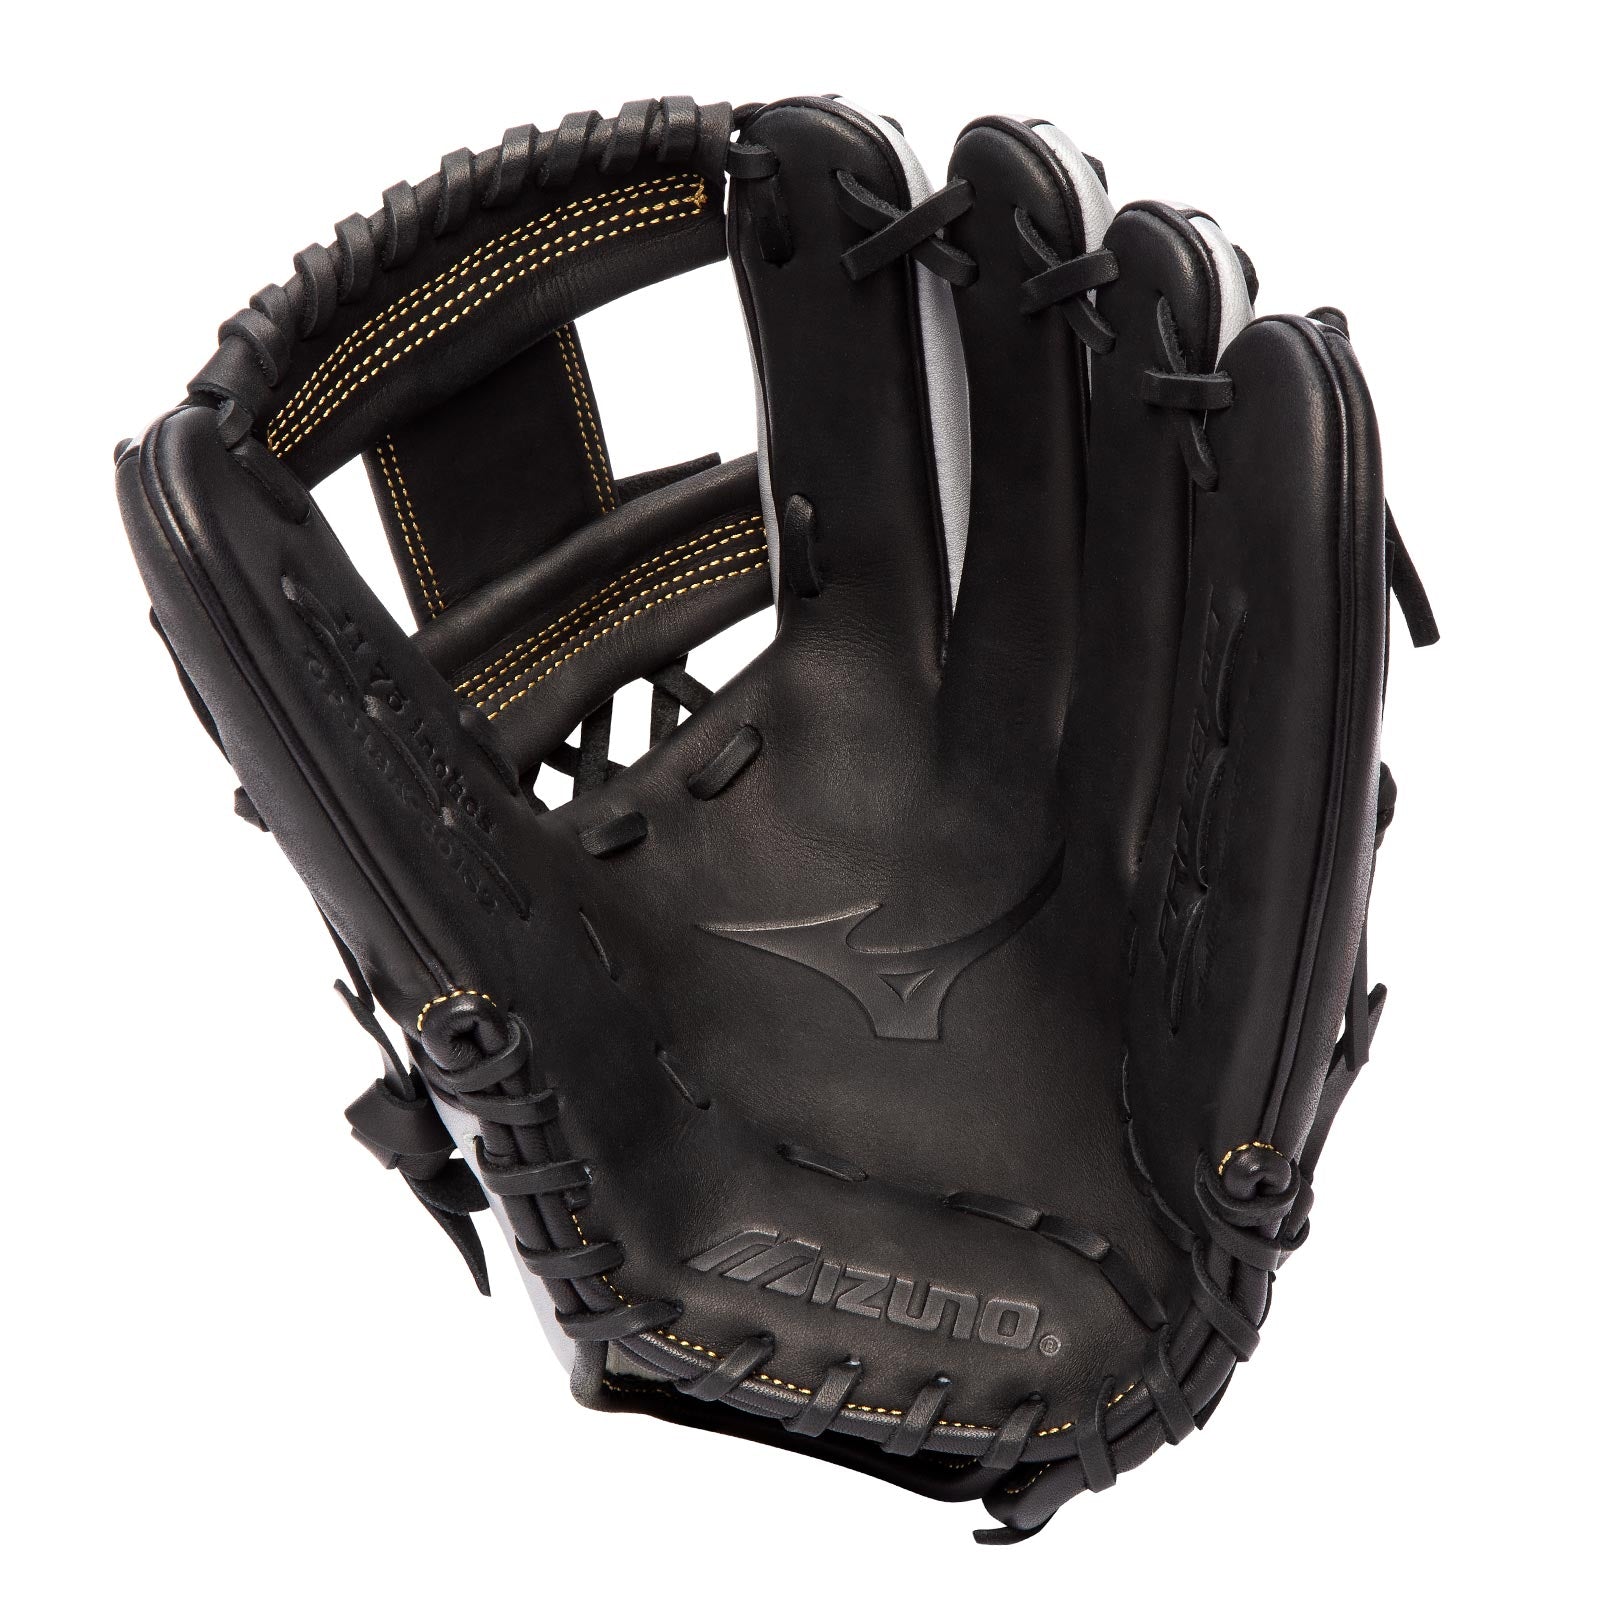 Mizuno Pro Select GPS1BK-601S2 11.75"Baseball Glove